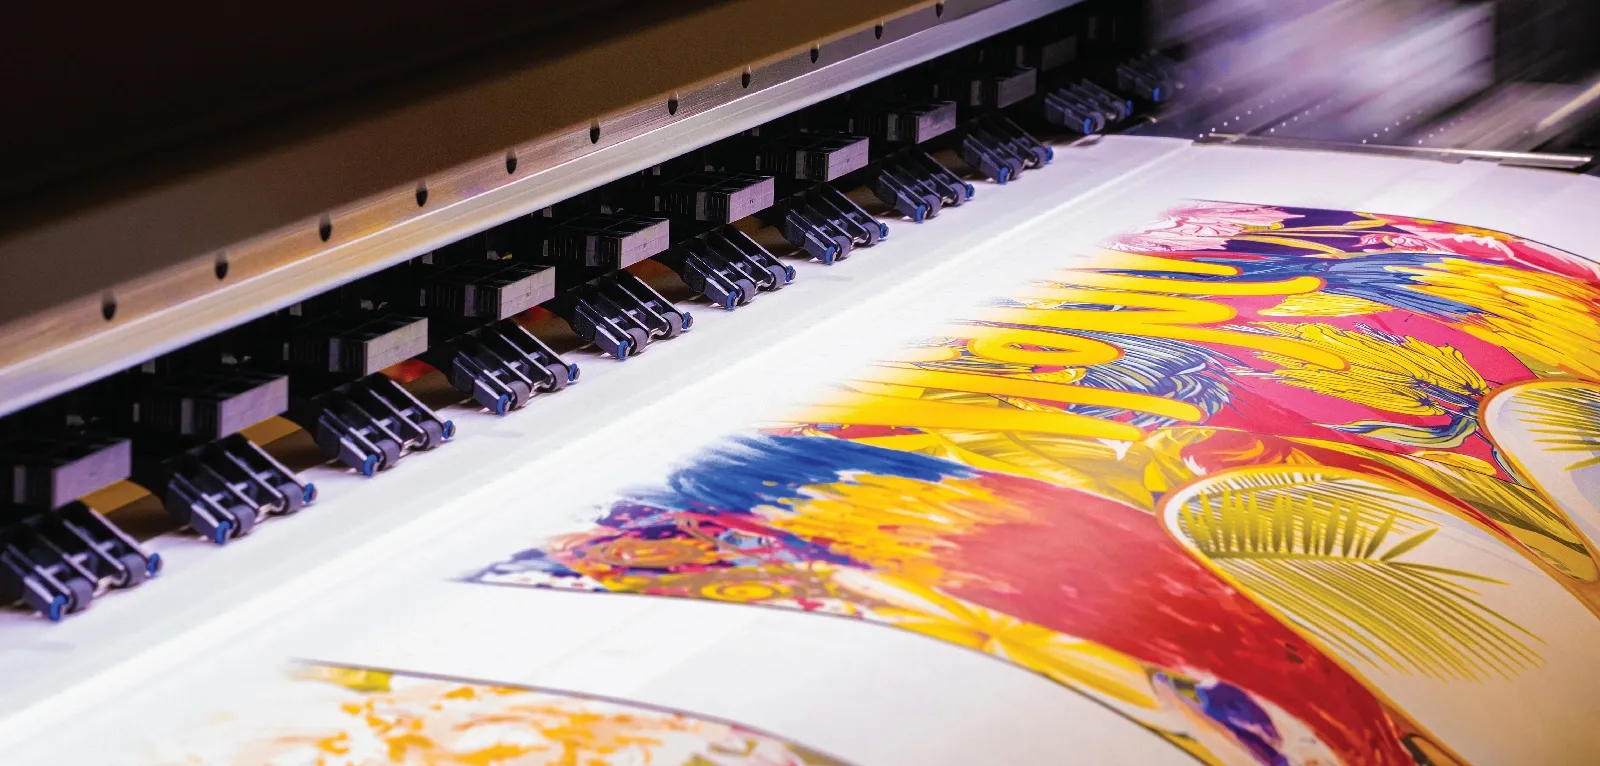 A colorful design exits a printer